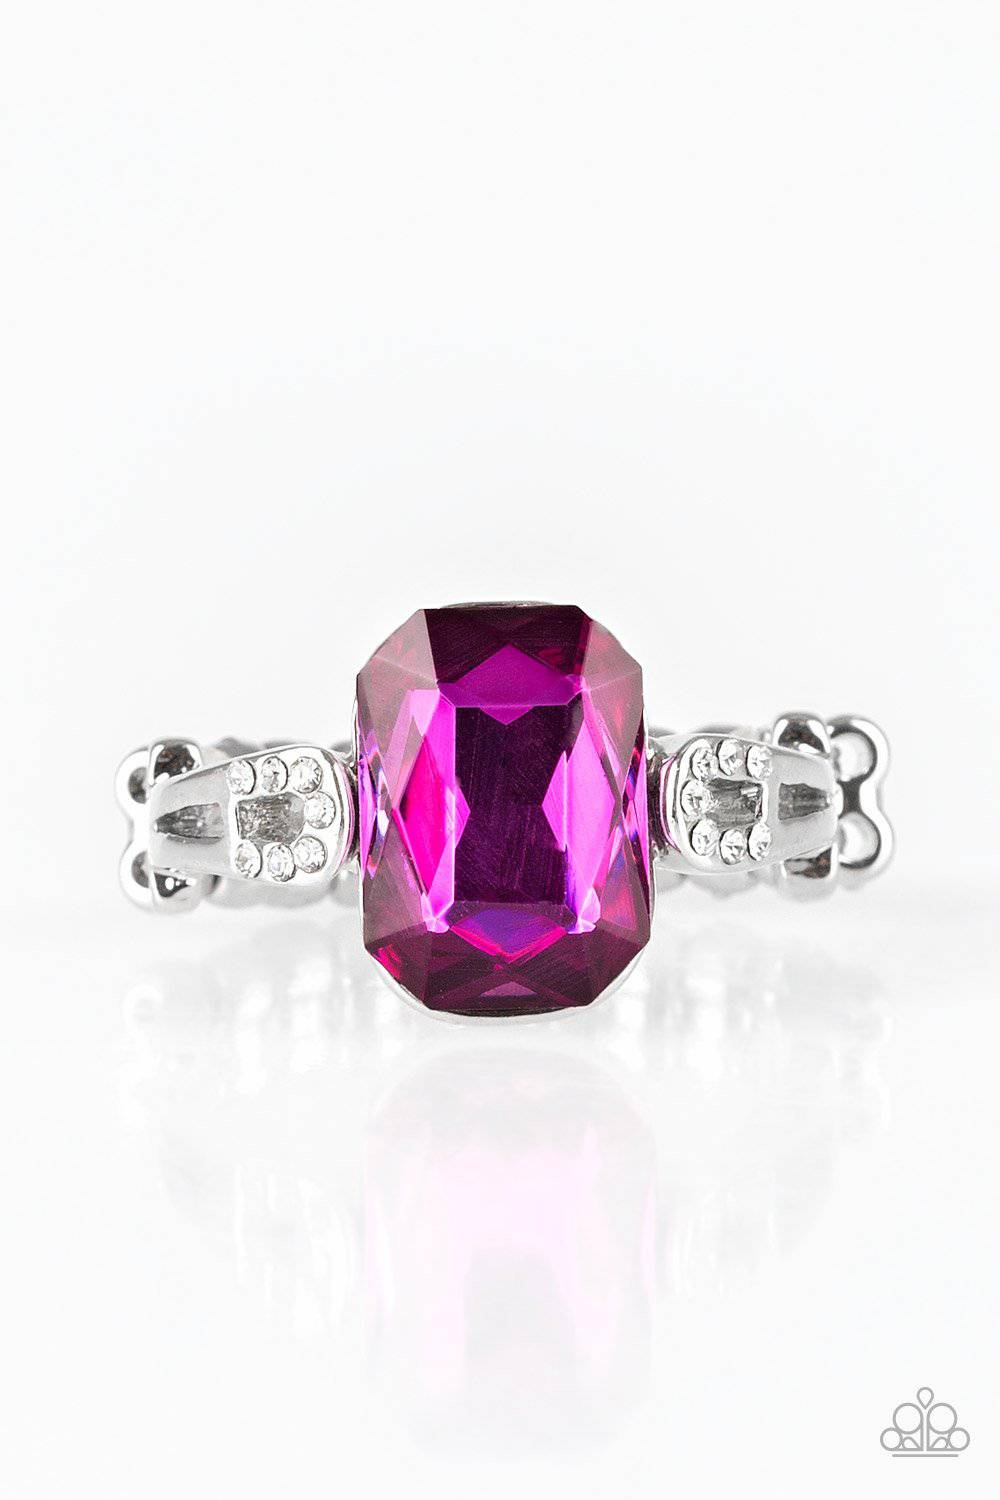 Feast Your Eyes - Pink Rhinestone Ring - Paparazzi Accessories - GlaMarous Titi Jewels